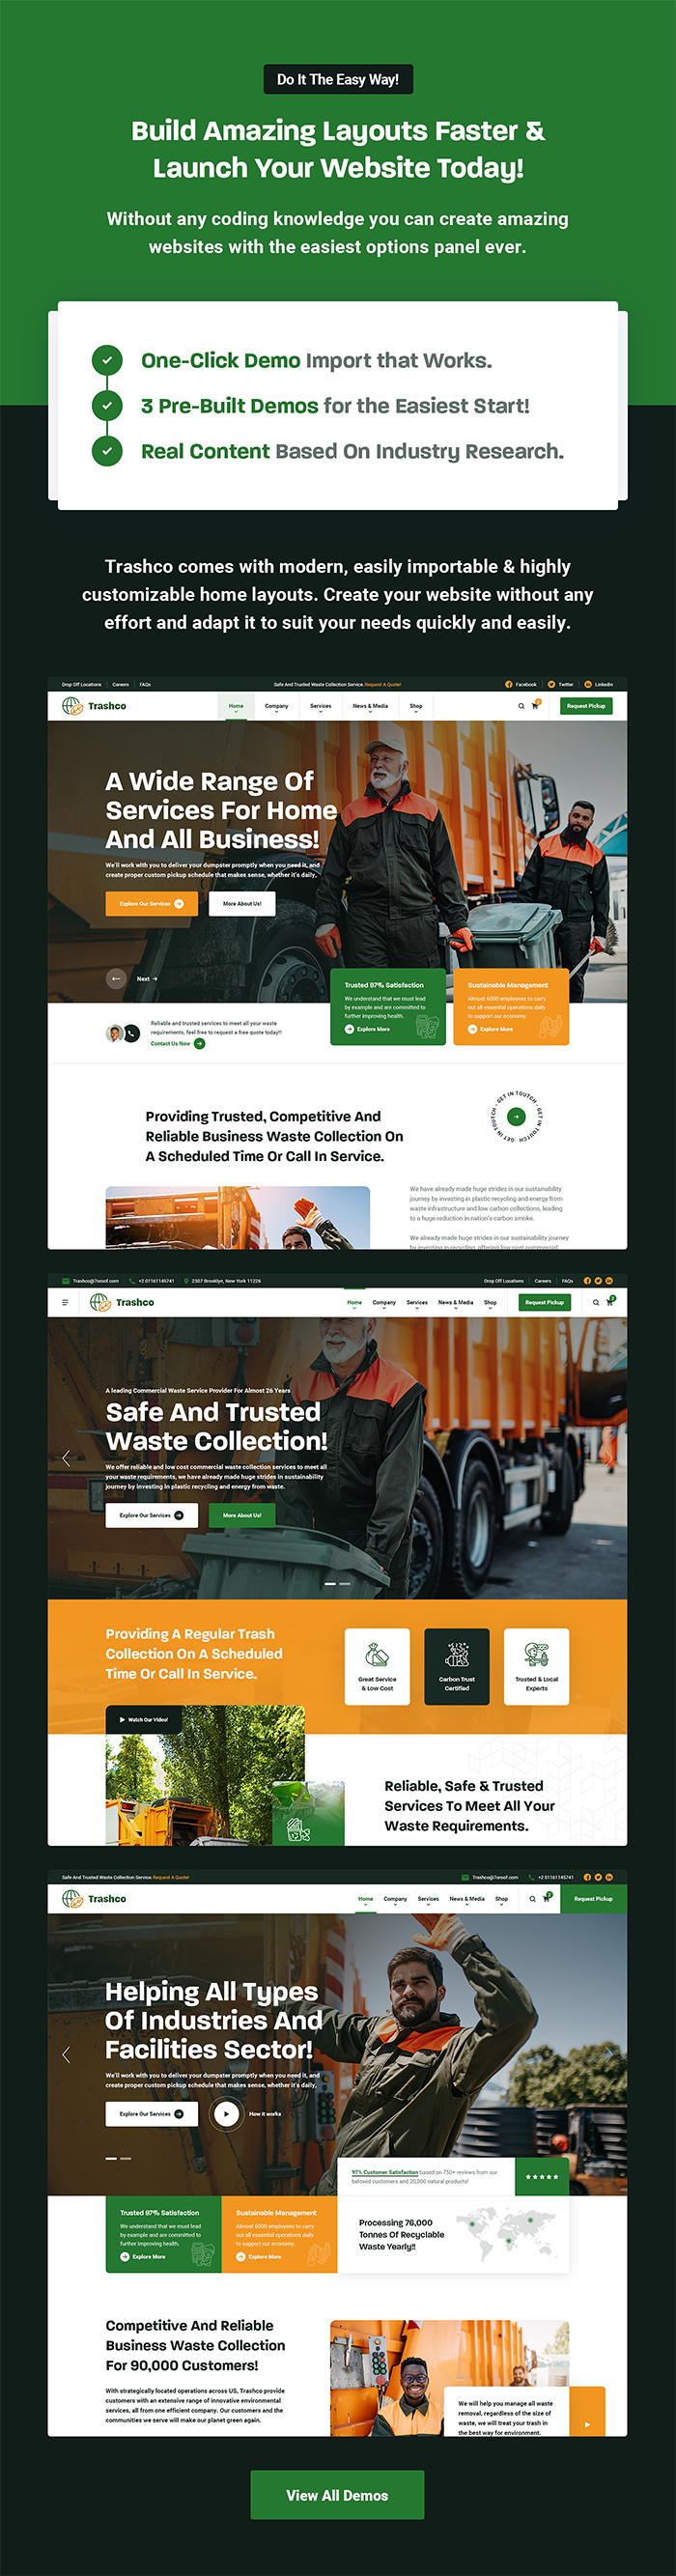 Trashco - Waste Management & Disposal Services WordPress Theme - 5